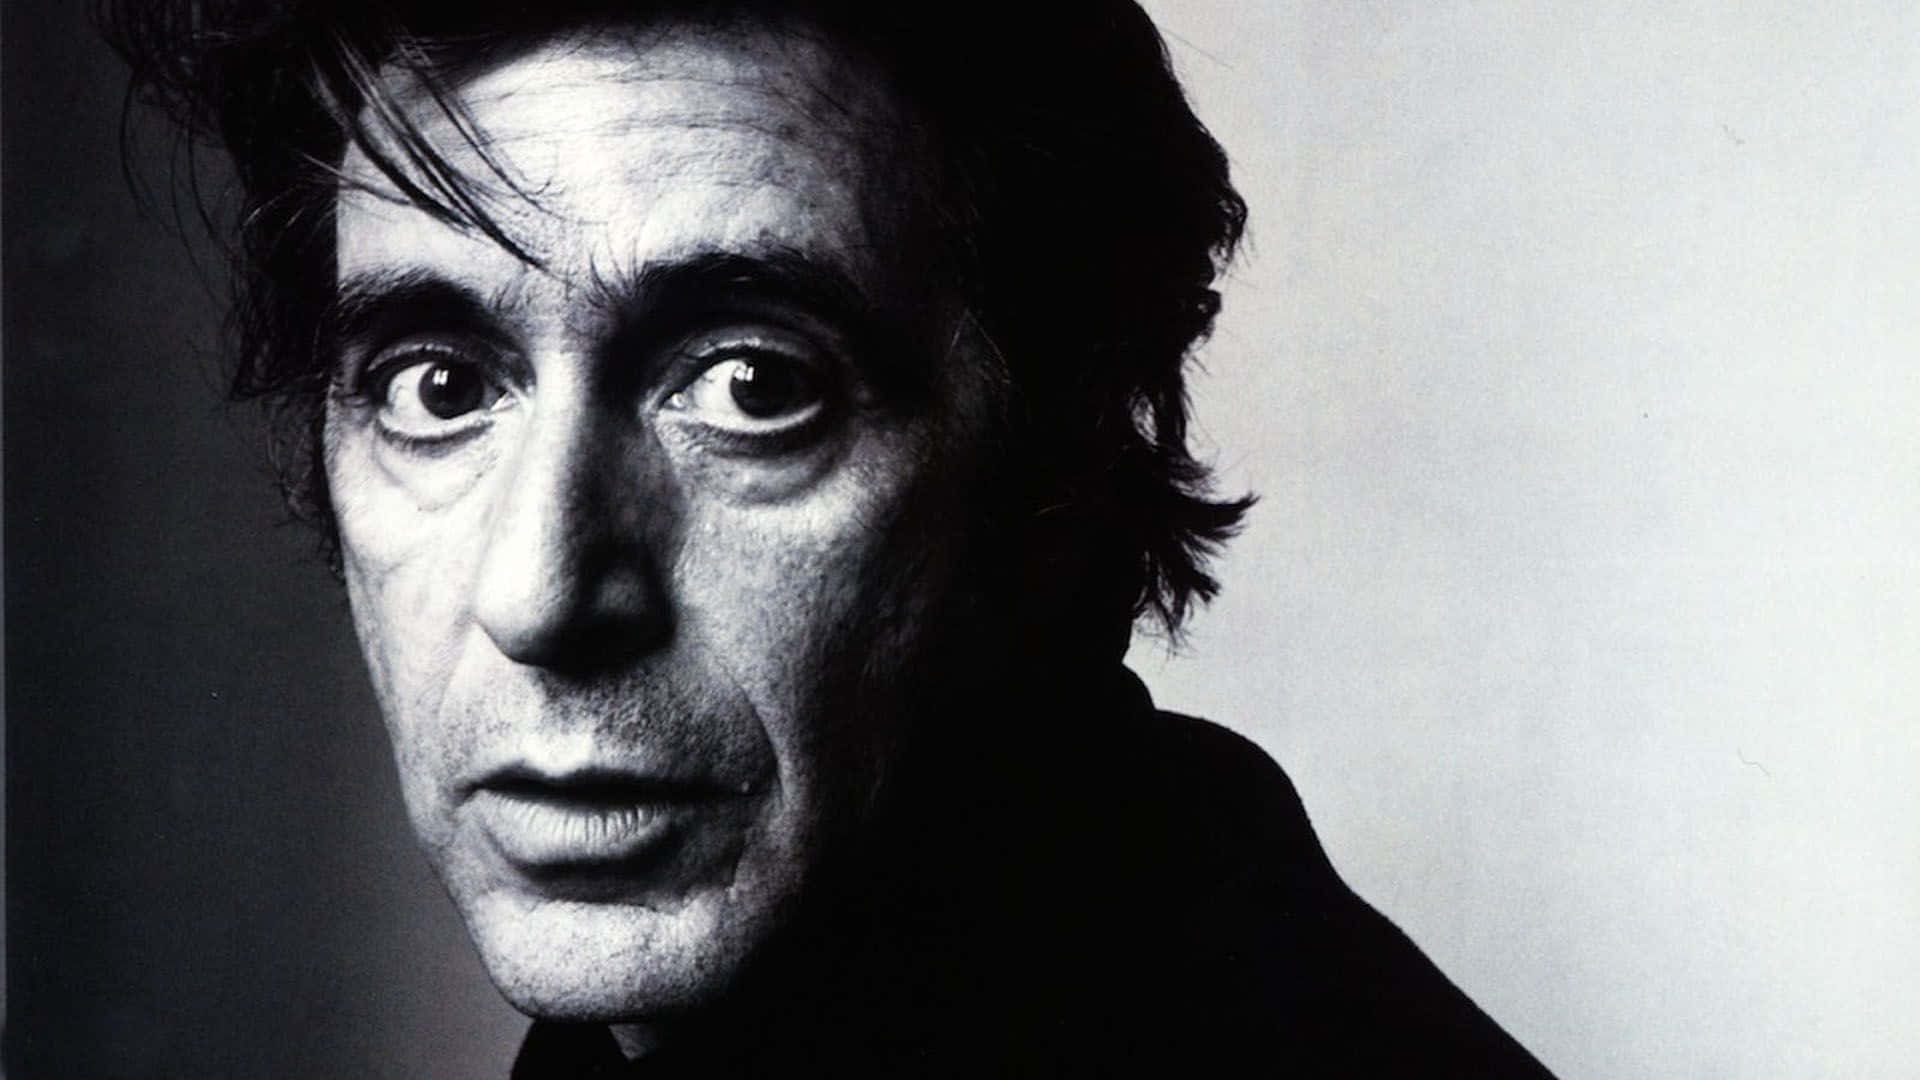 "Breathtaking Performance by Al Pacino"